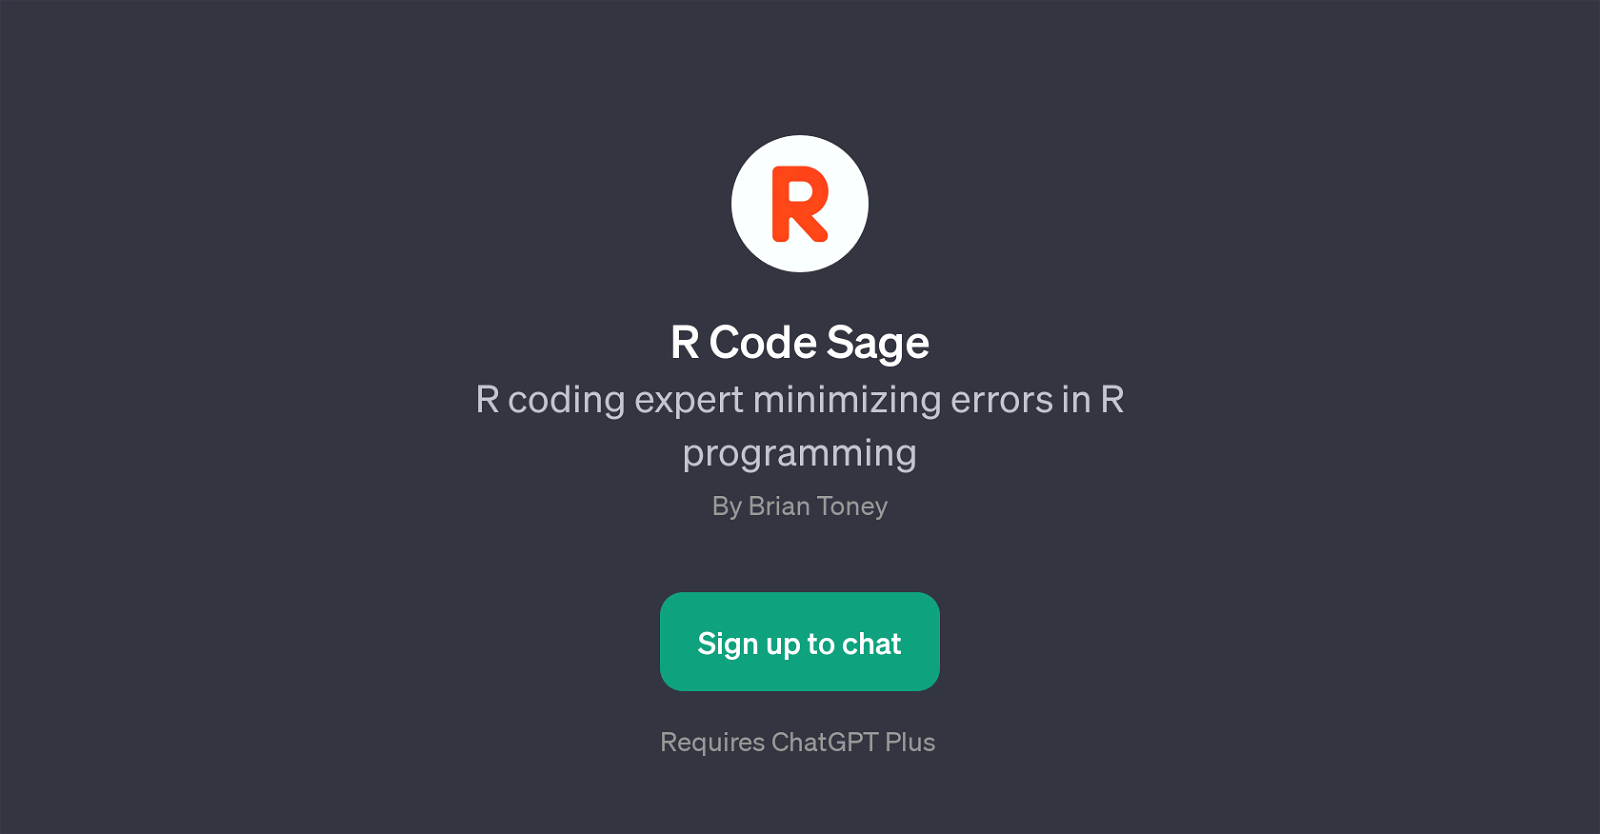 R Code Sage website